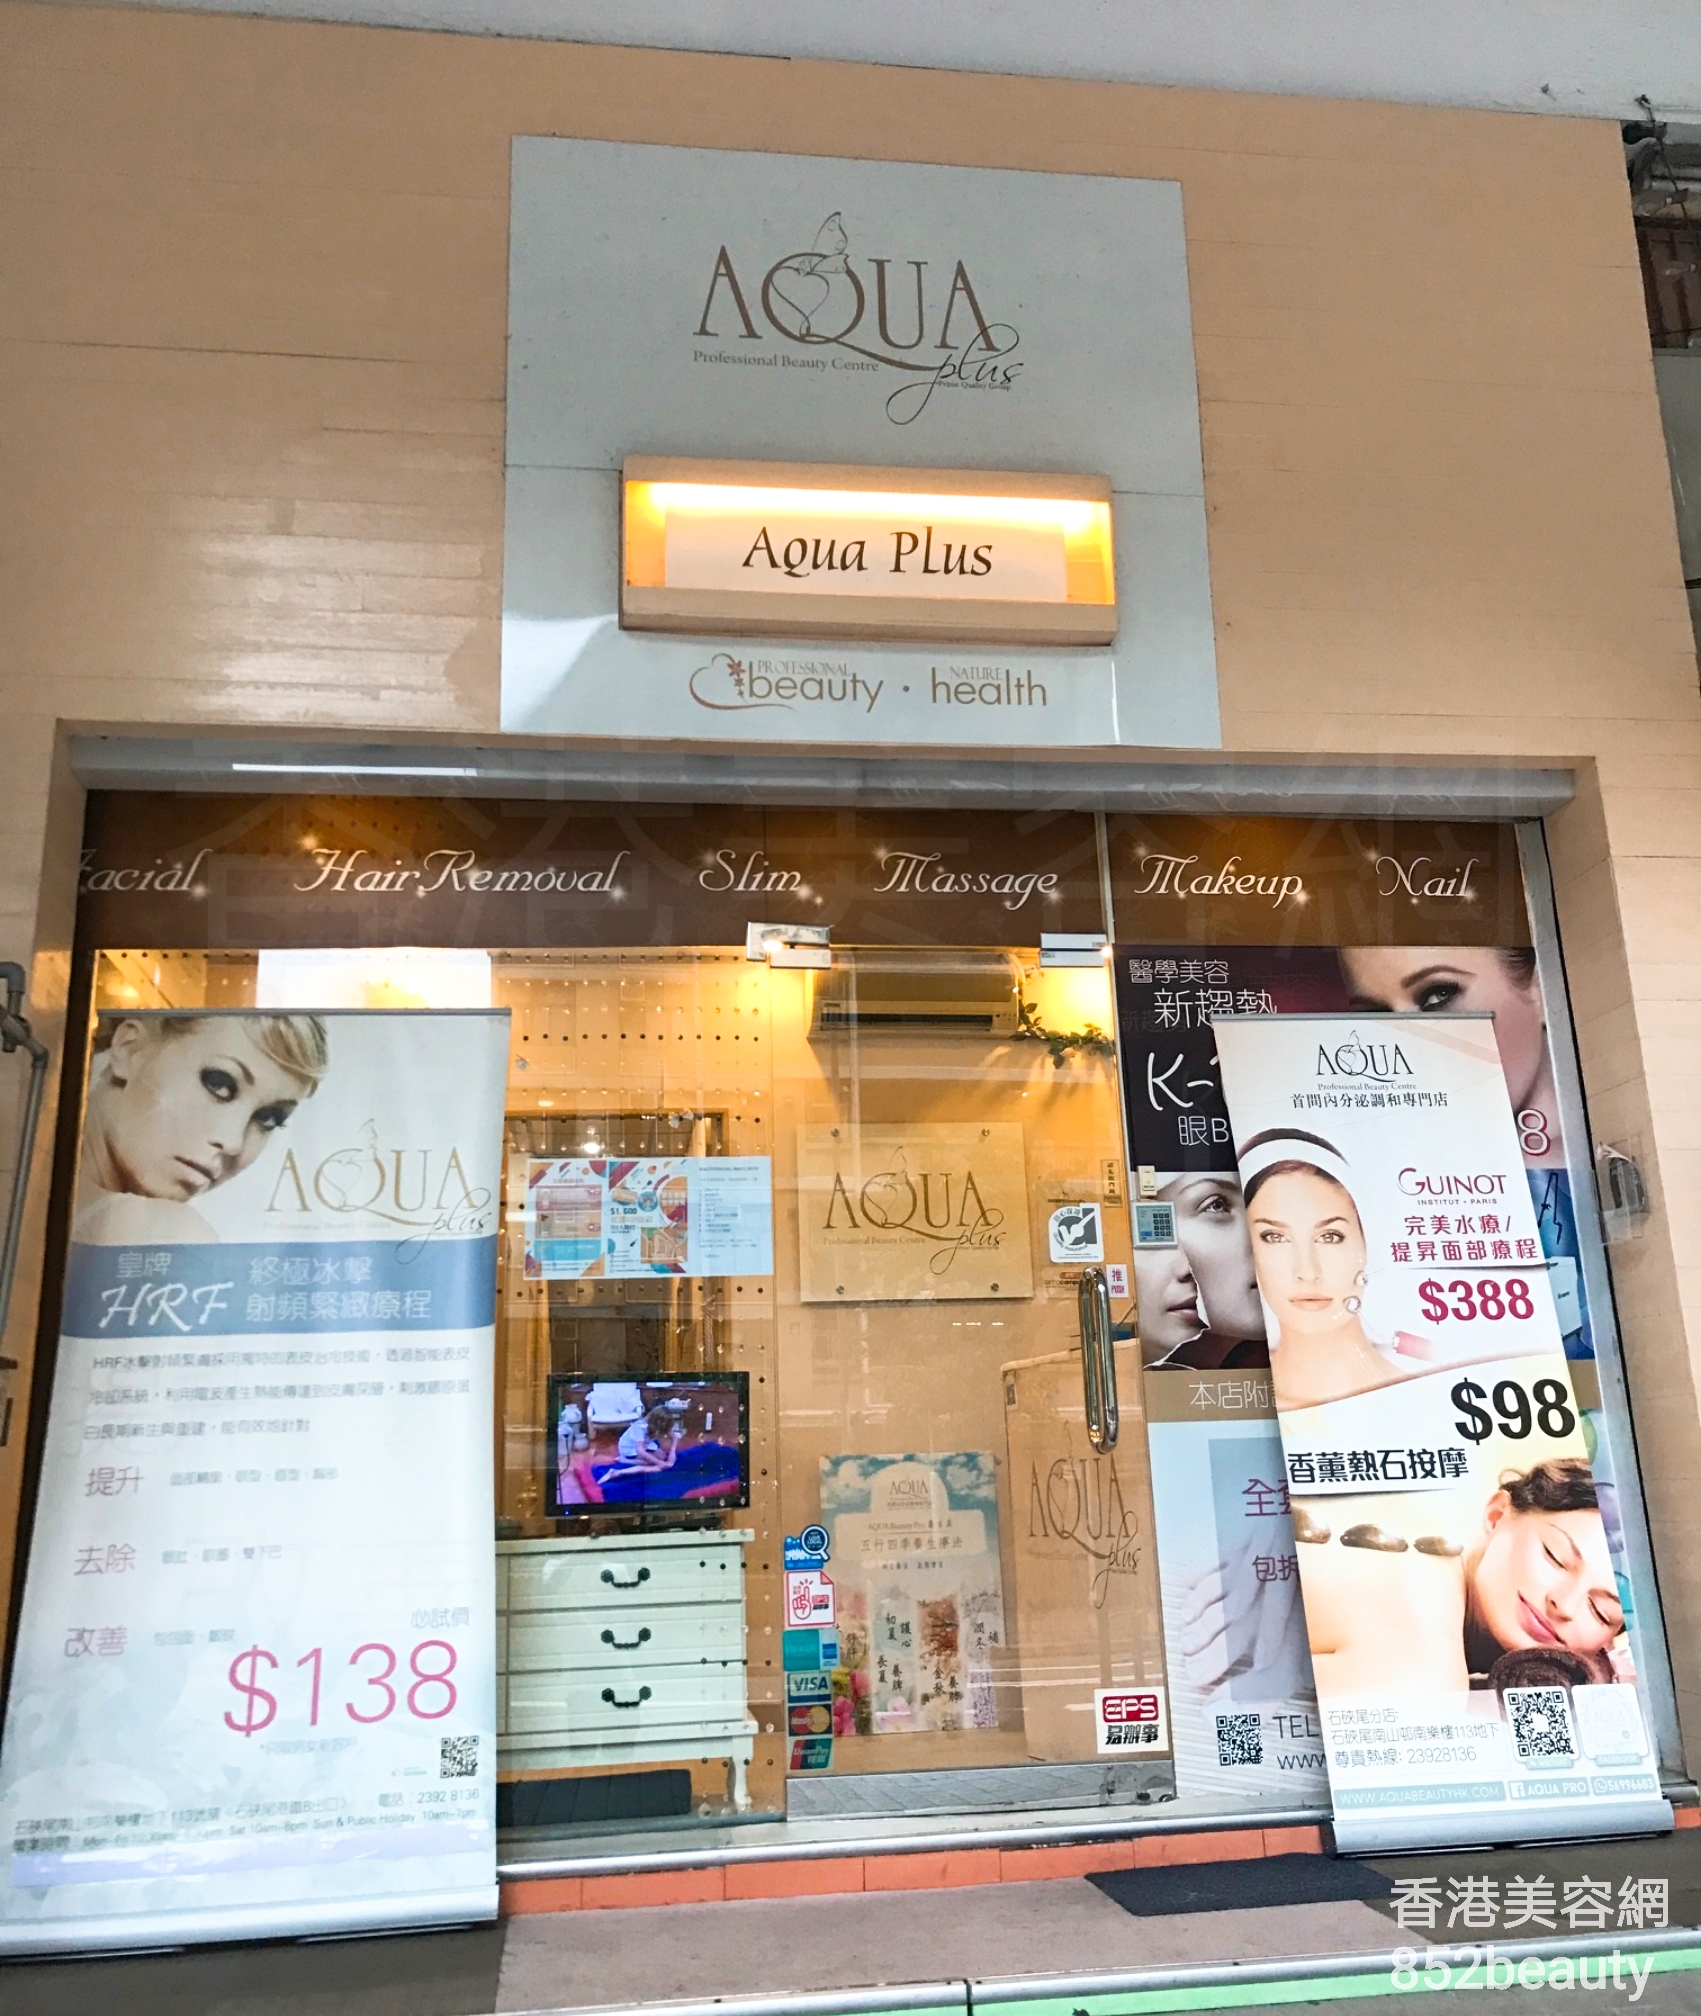 Facial Care: AQUA Professional Beauty Centre (石硤尾分店)